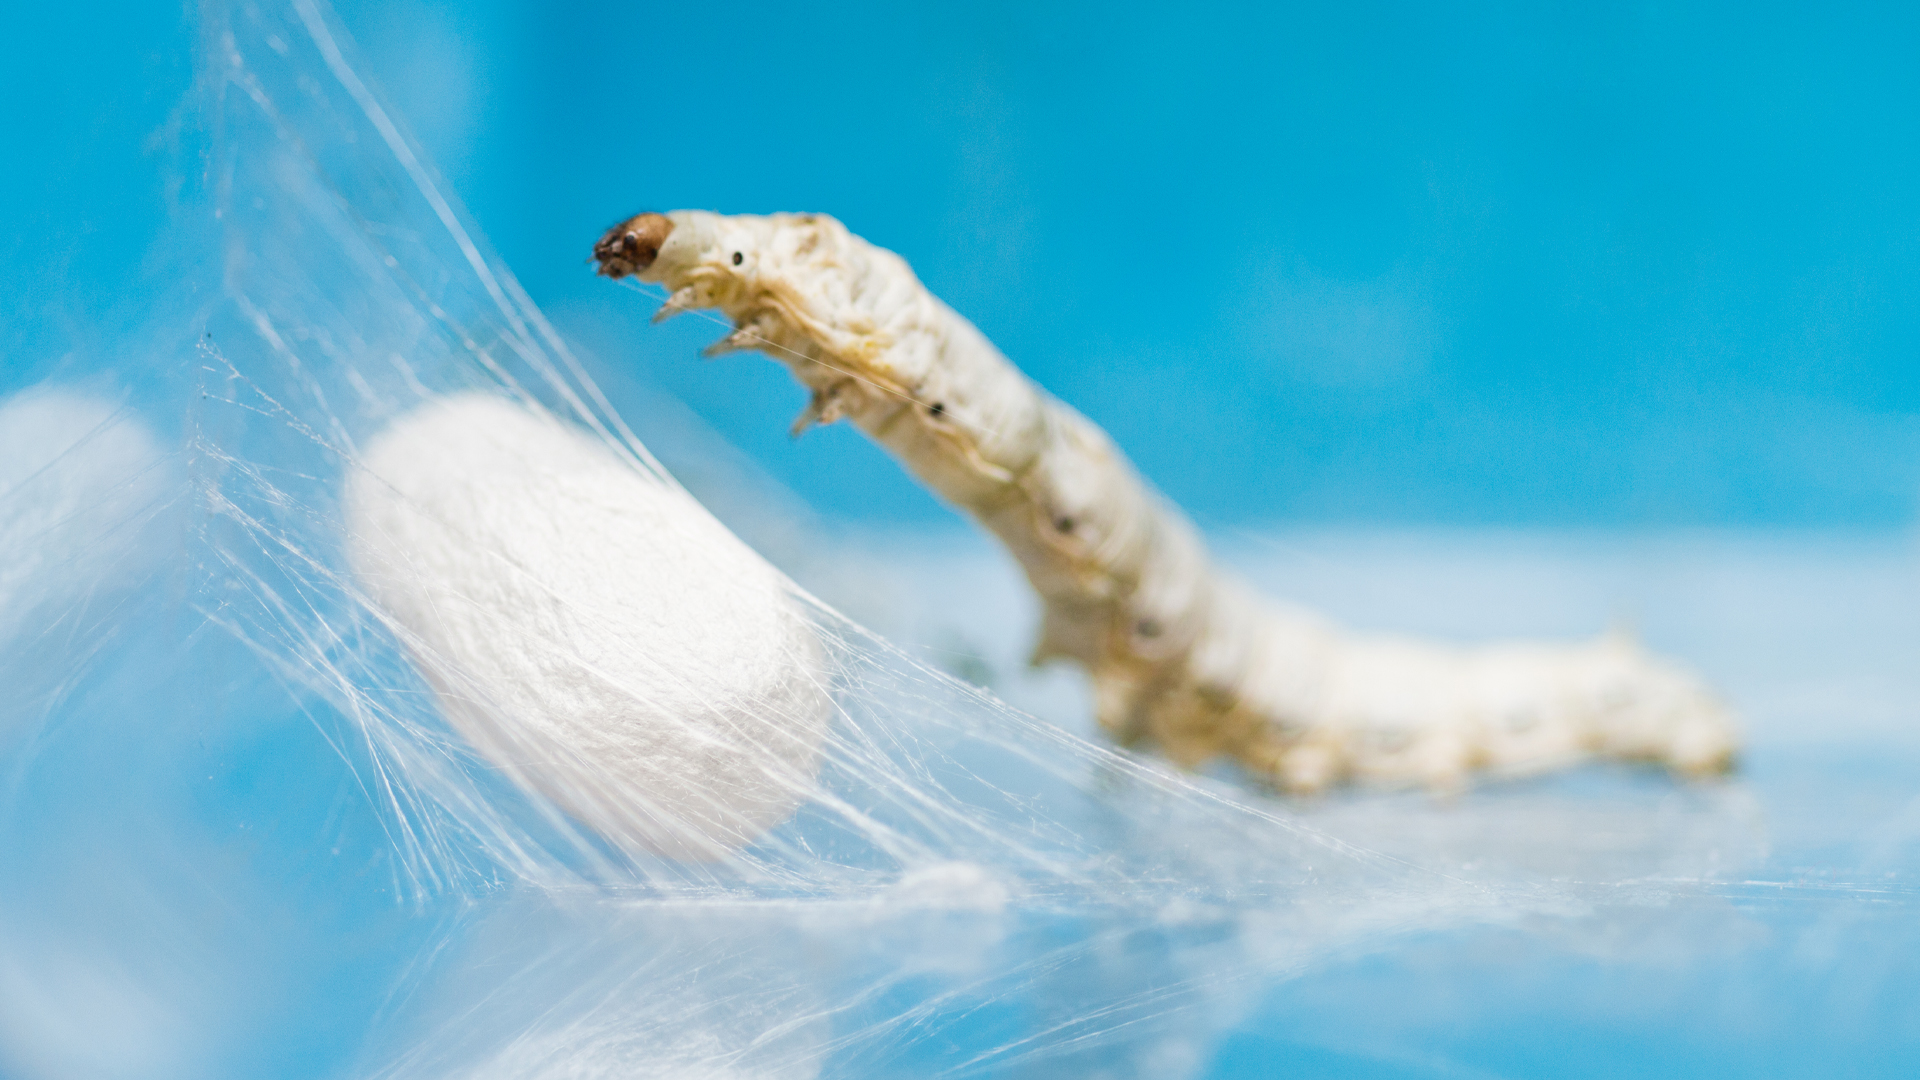 EU project adapted spider and worm silks to create bio-plastics